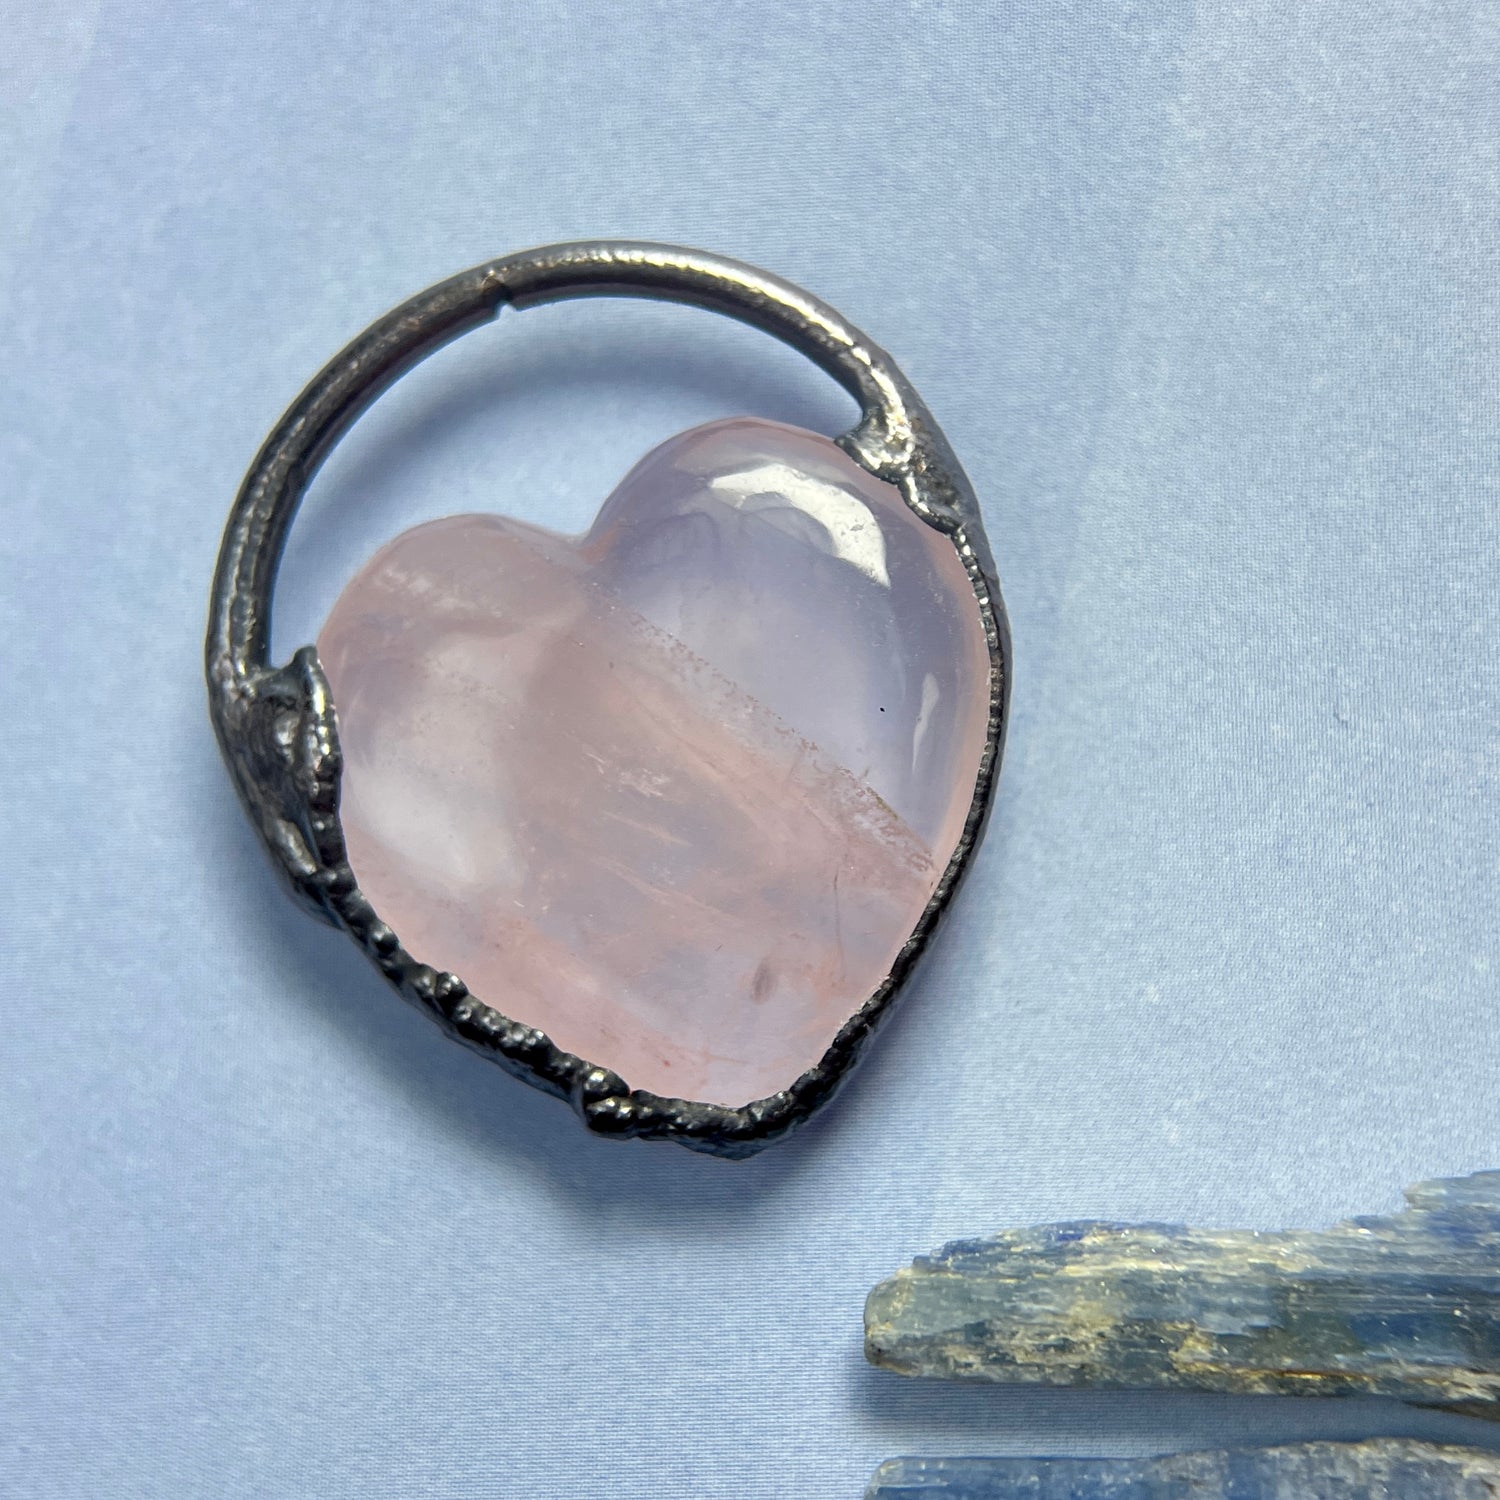 Handmade healing crystal heart pendant necklace 